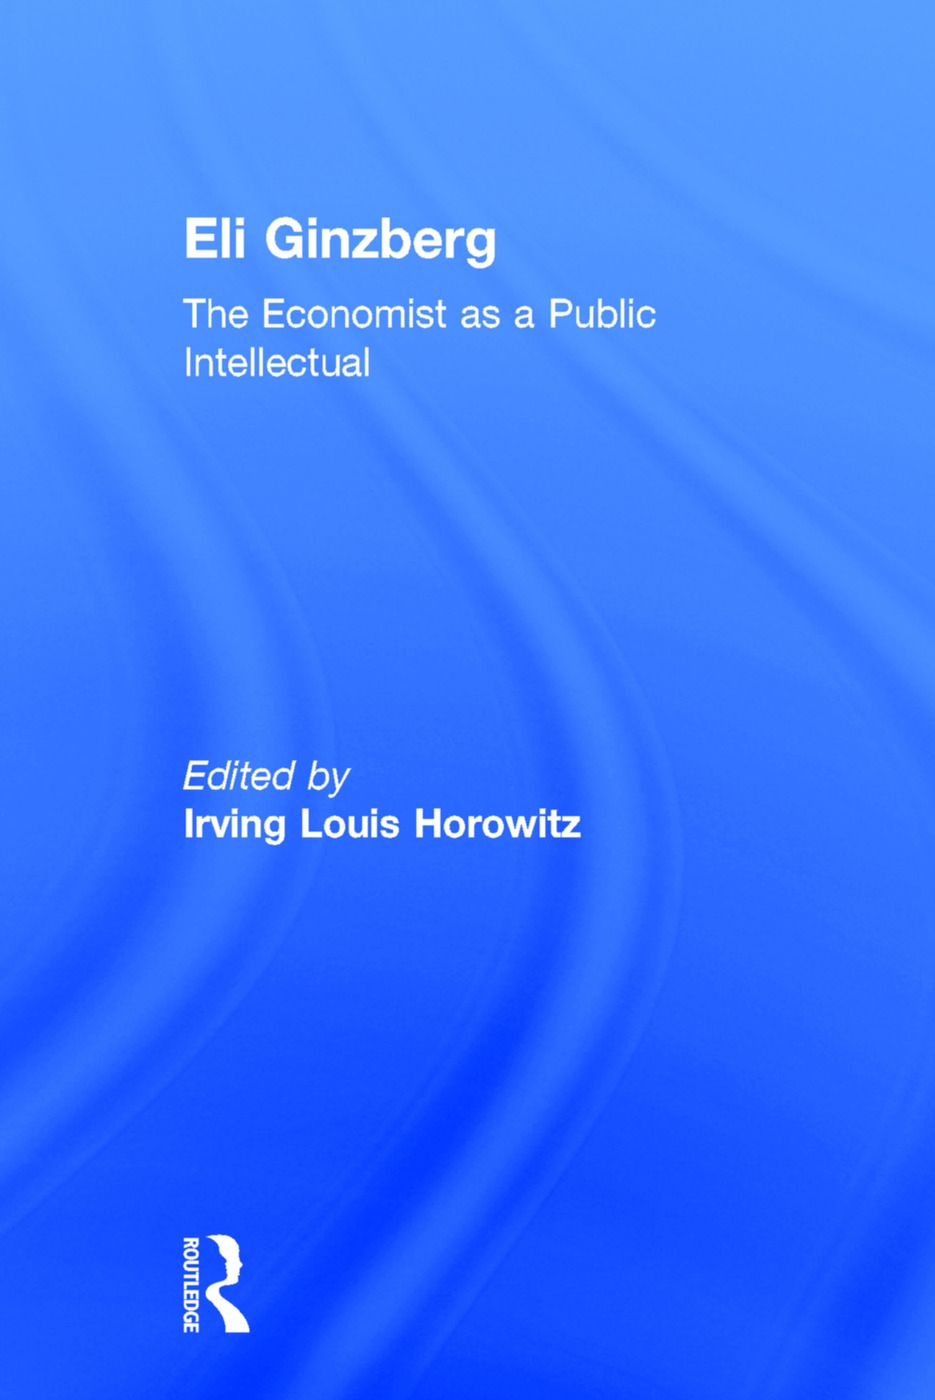 Eli Ginzberg: The Economist As a Public Intellectual